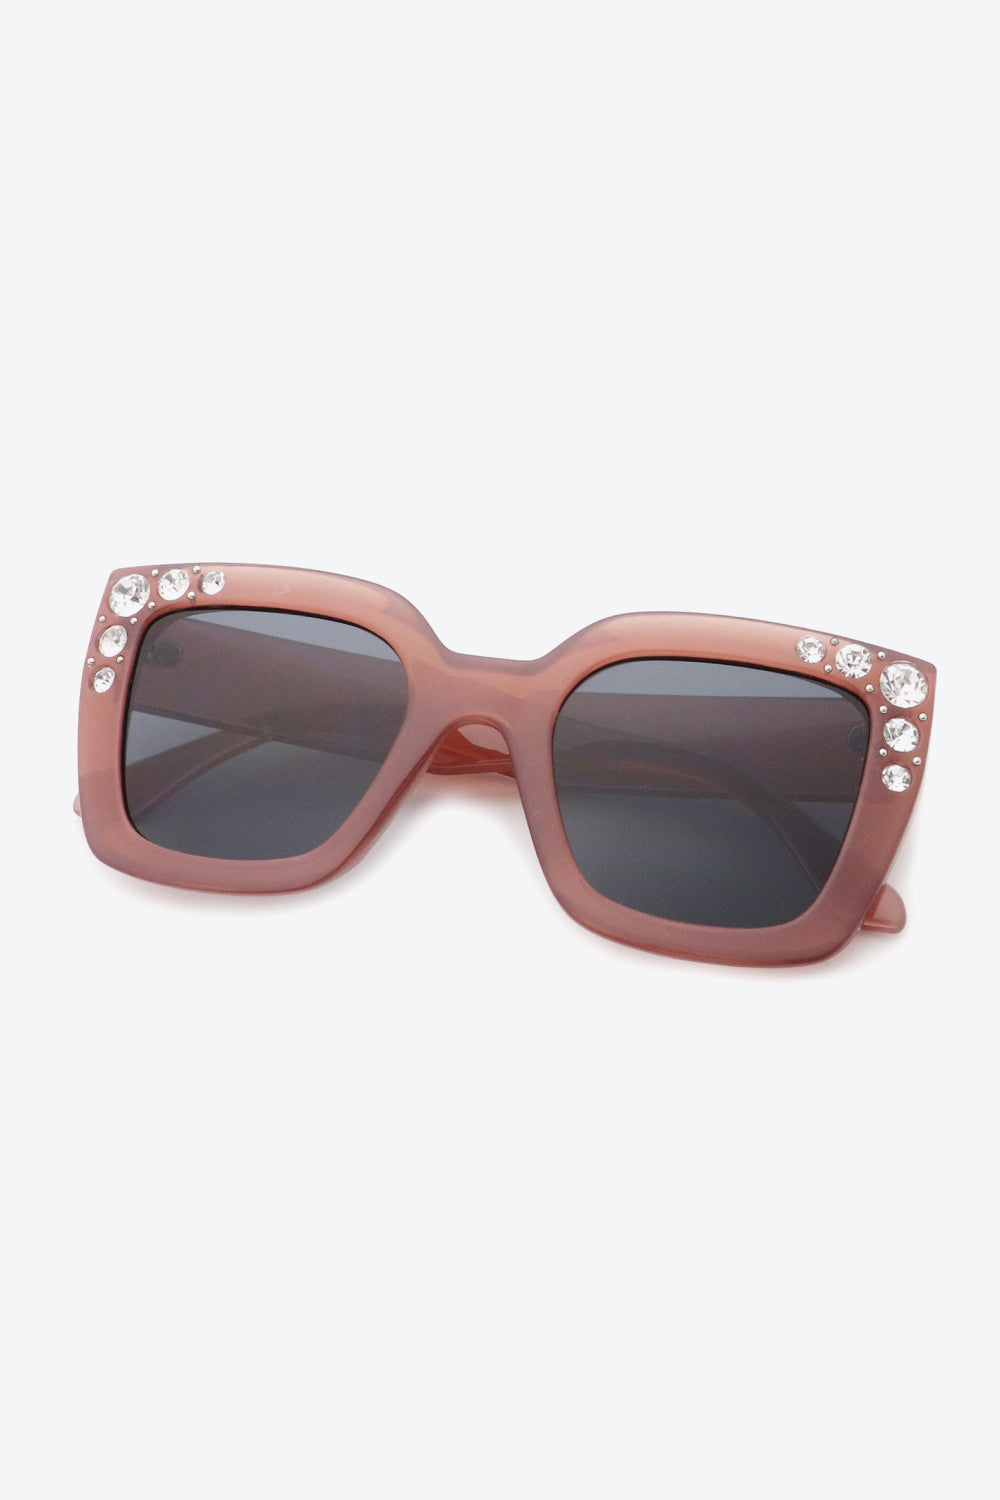 Inlaid Rhinestone Polycarbonate Sunglasses - BEAUTY COSMOTICS SHOP